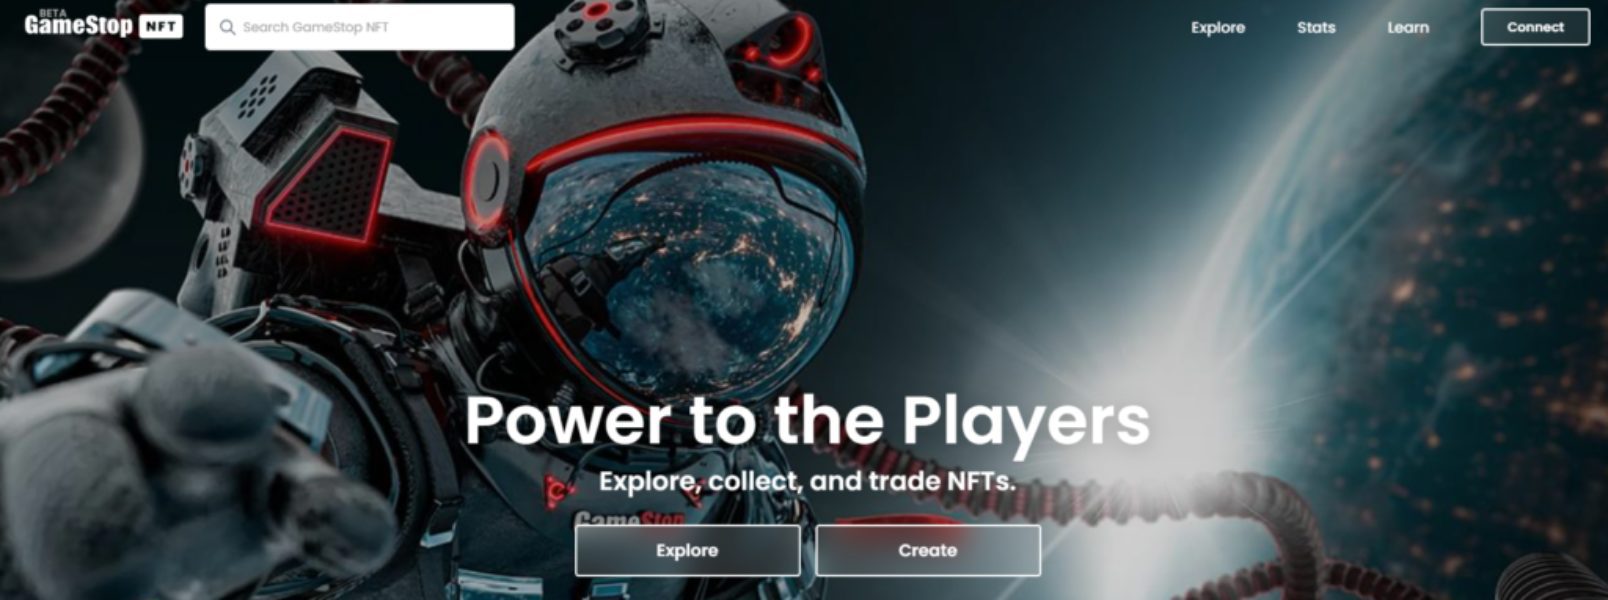 GameStop NFT Marketplace Launches | NFT CULTURE | NFT News | Web3 ...